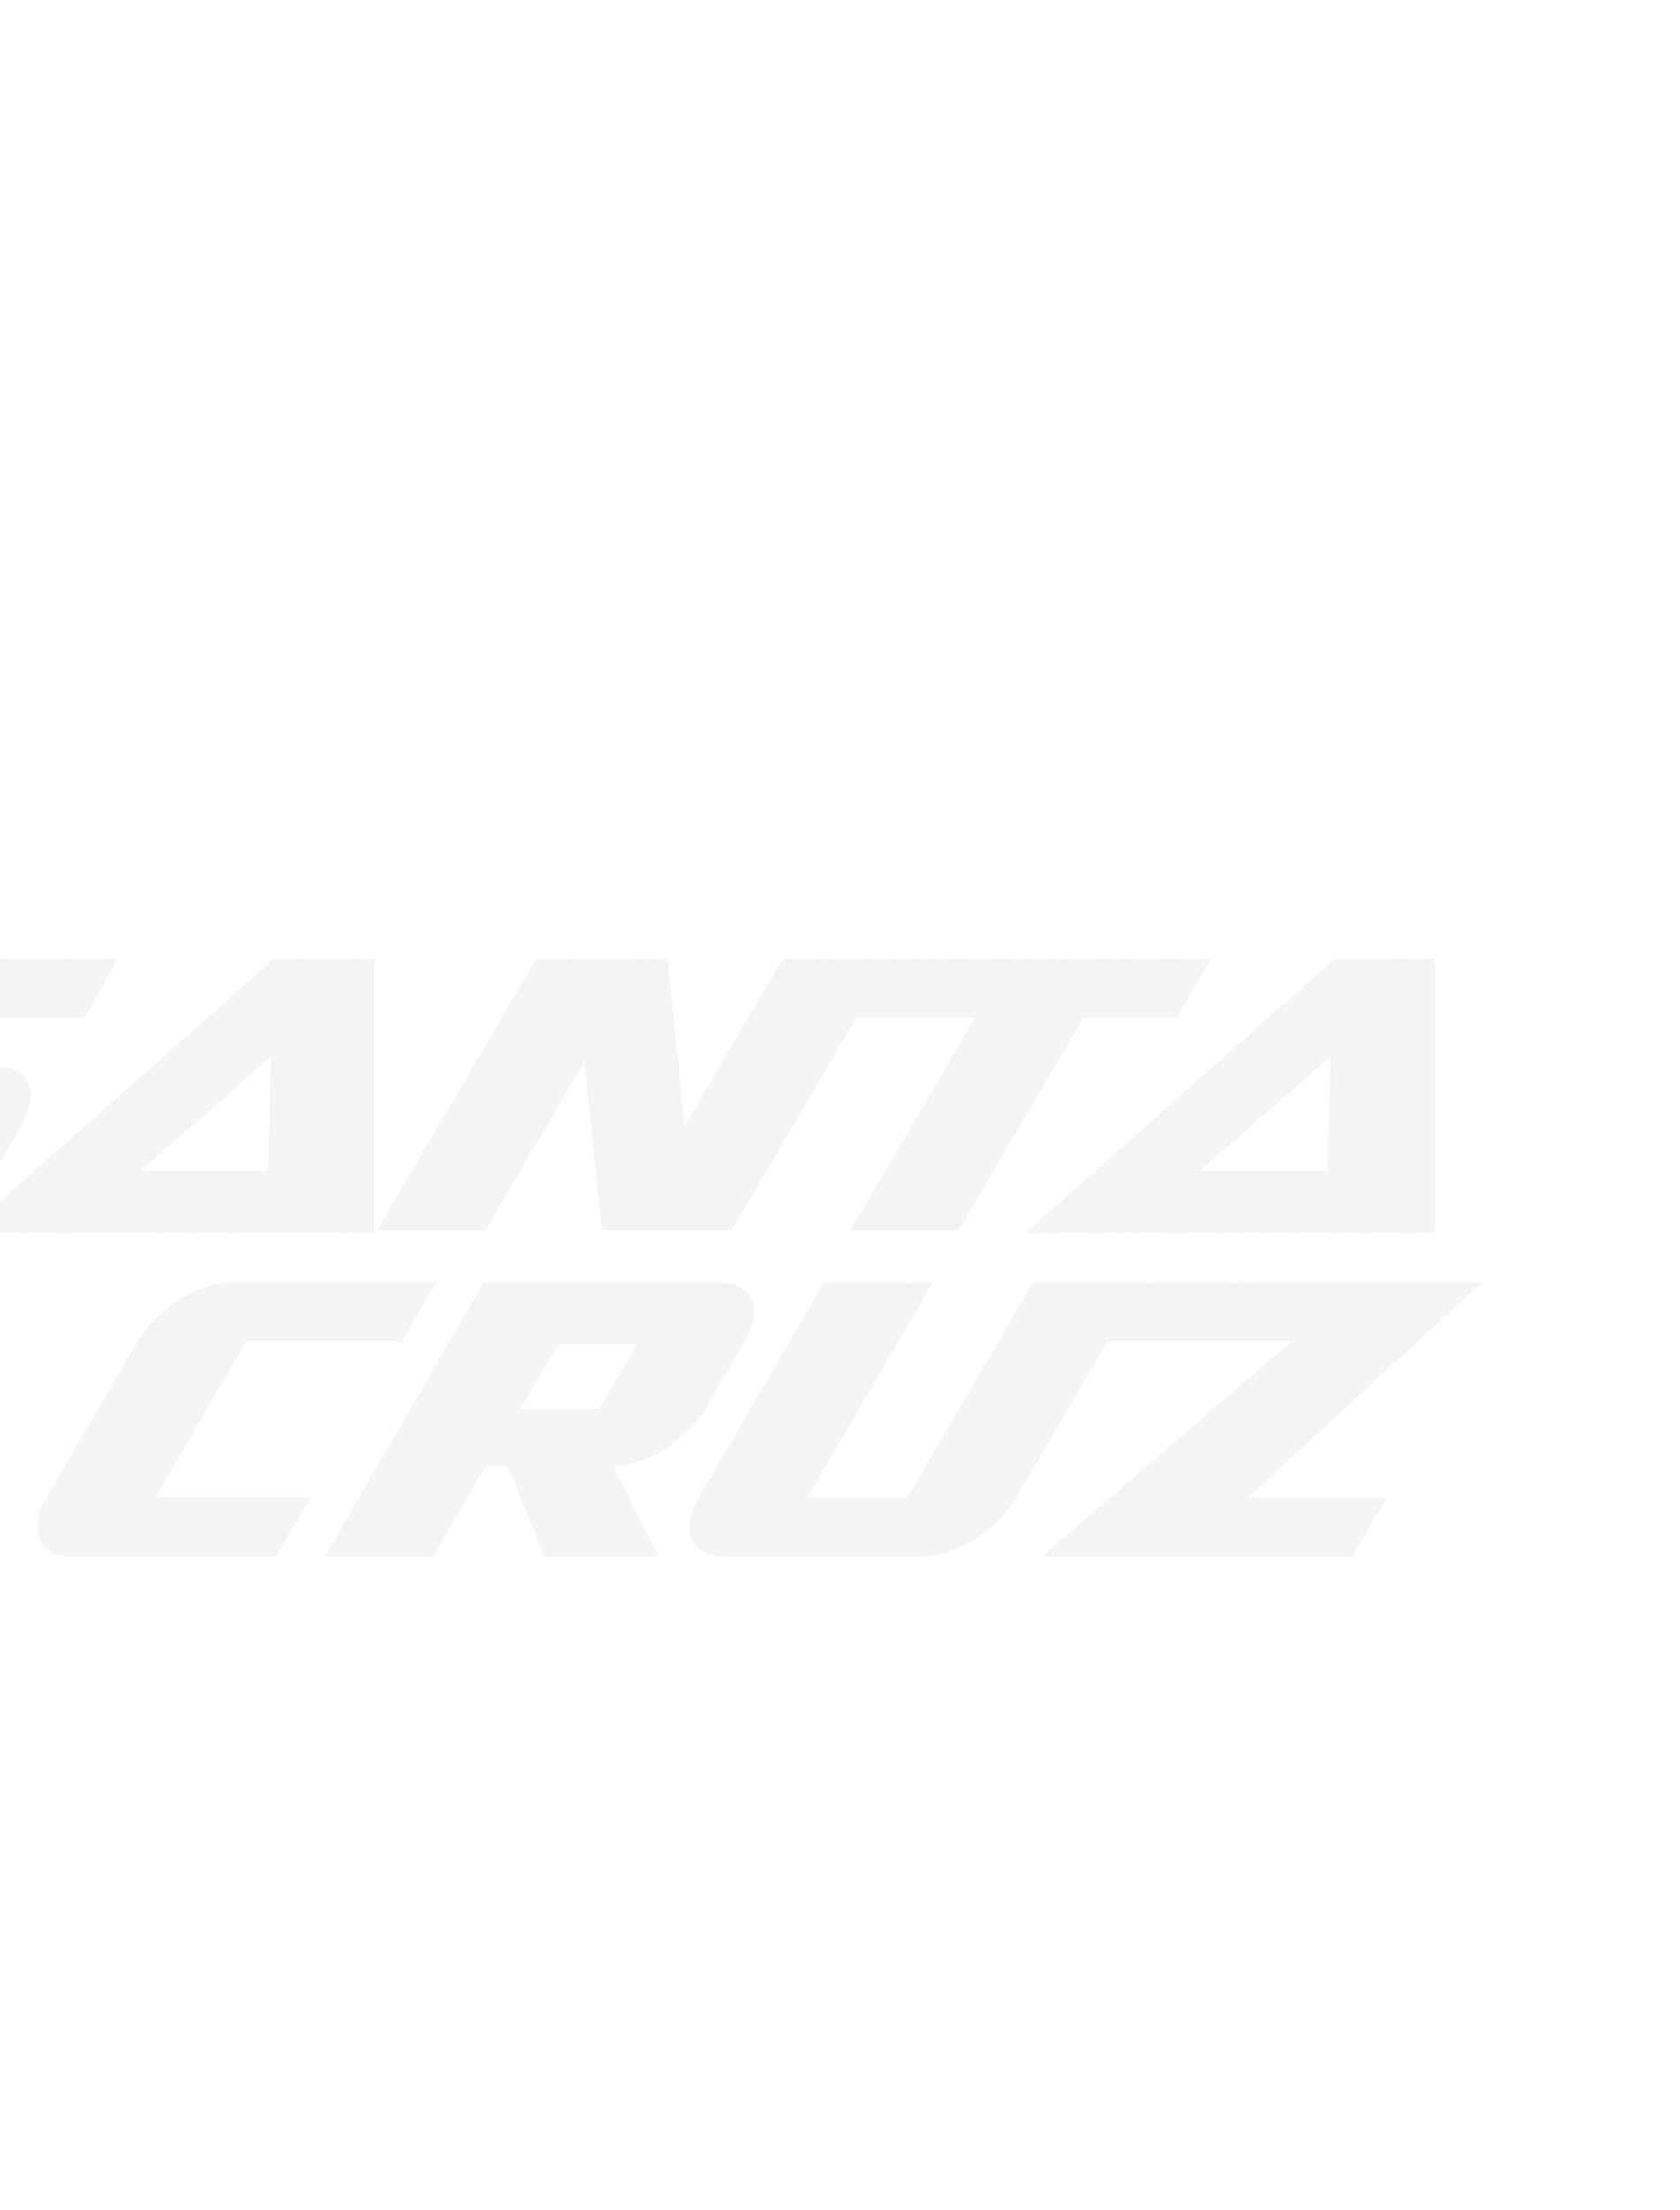 White background with the Santa Cruz Bicycles Logo